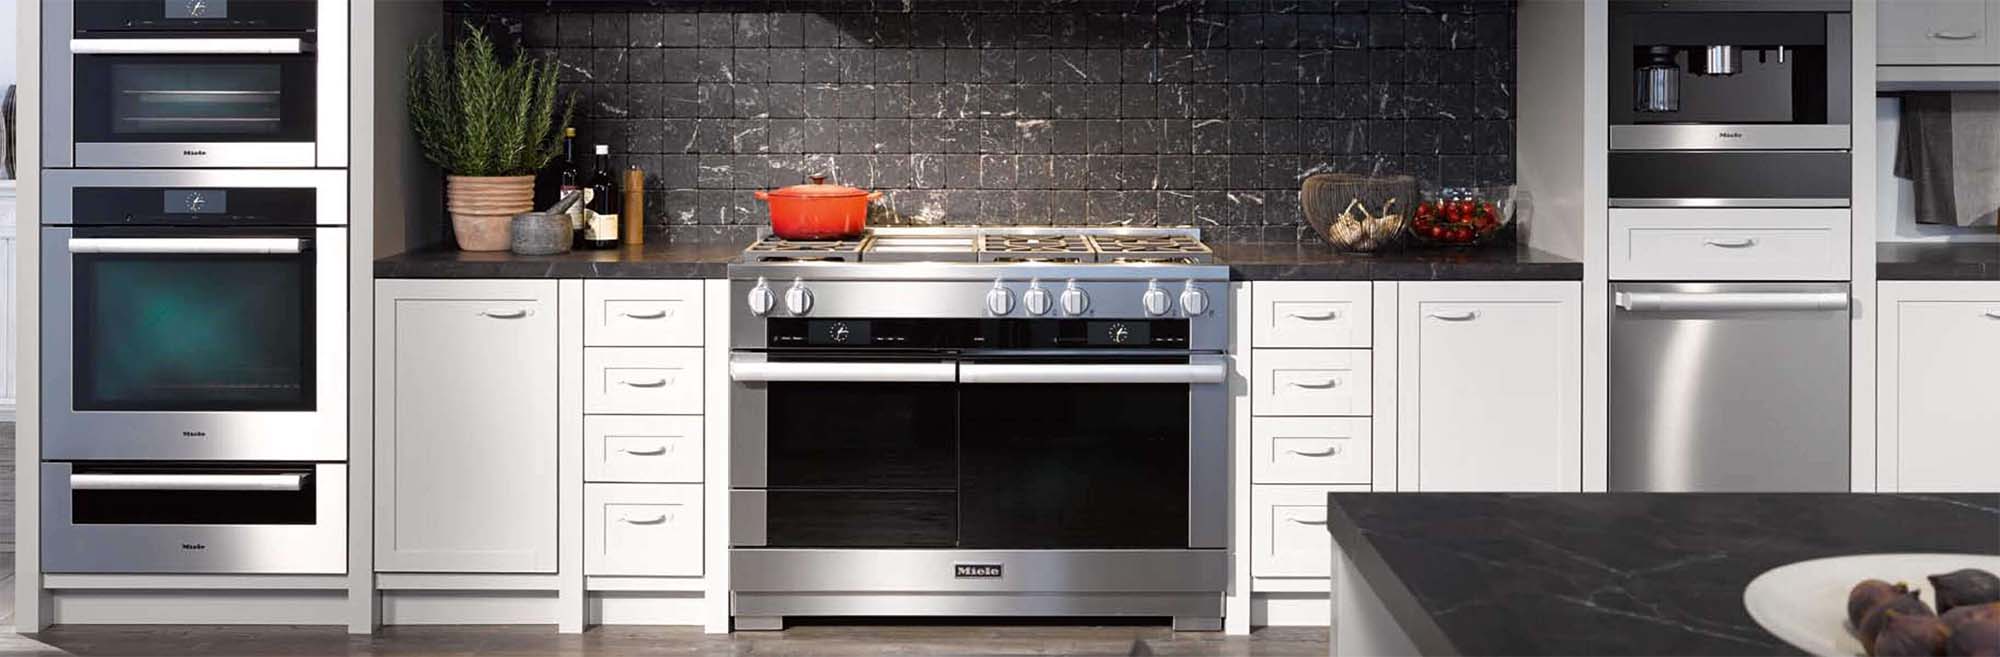 luxury kitchen design ideas Miele appliances Gambrick luxury home builder New Jersey